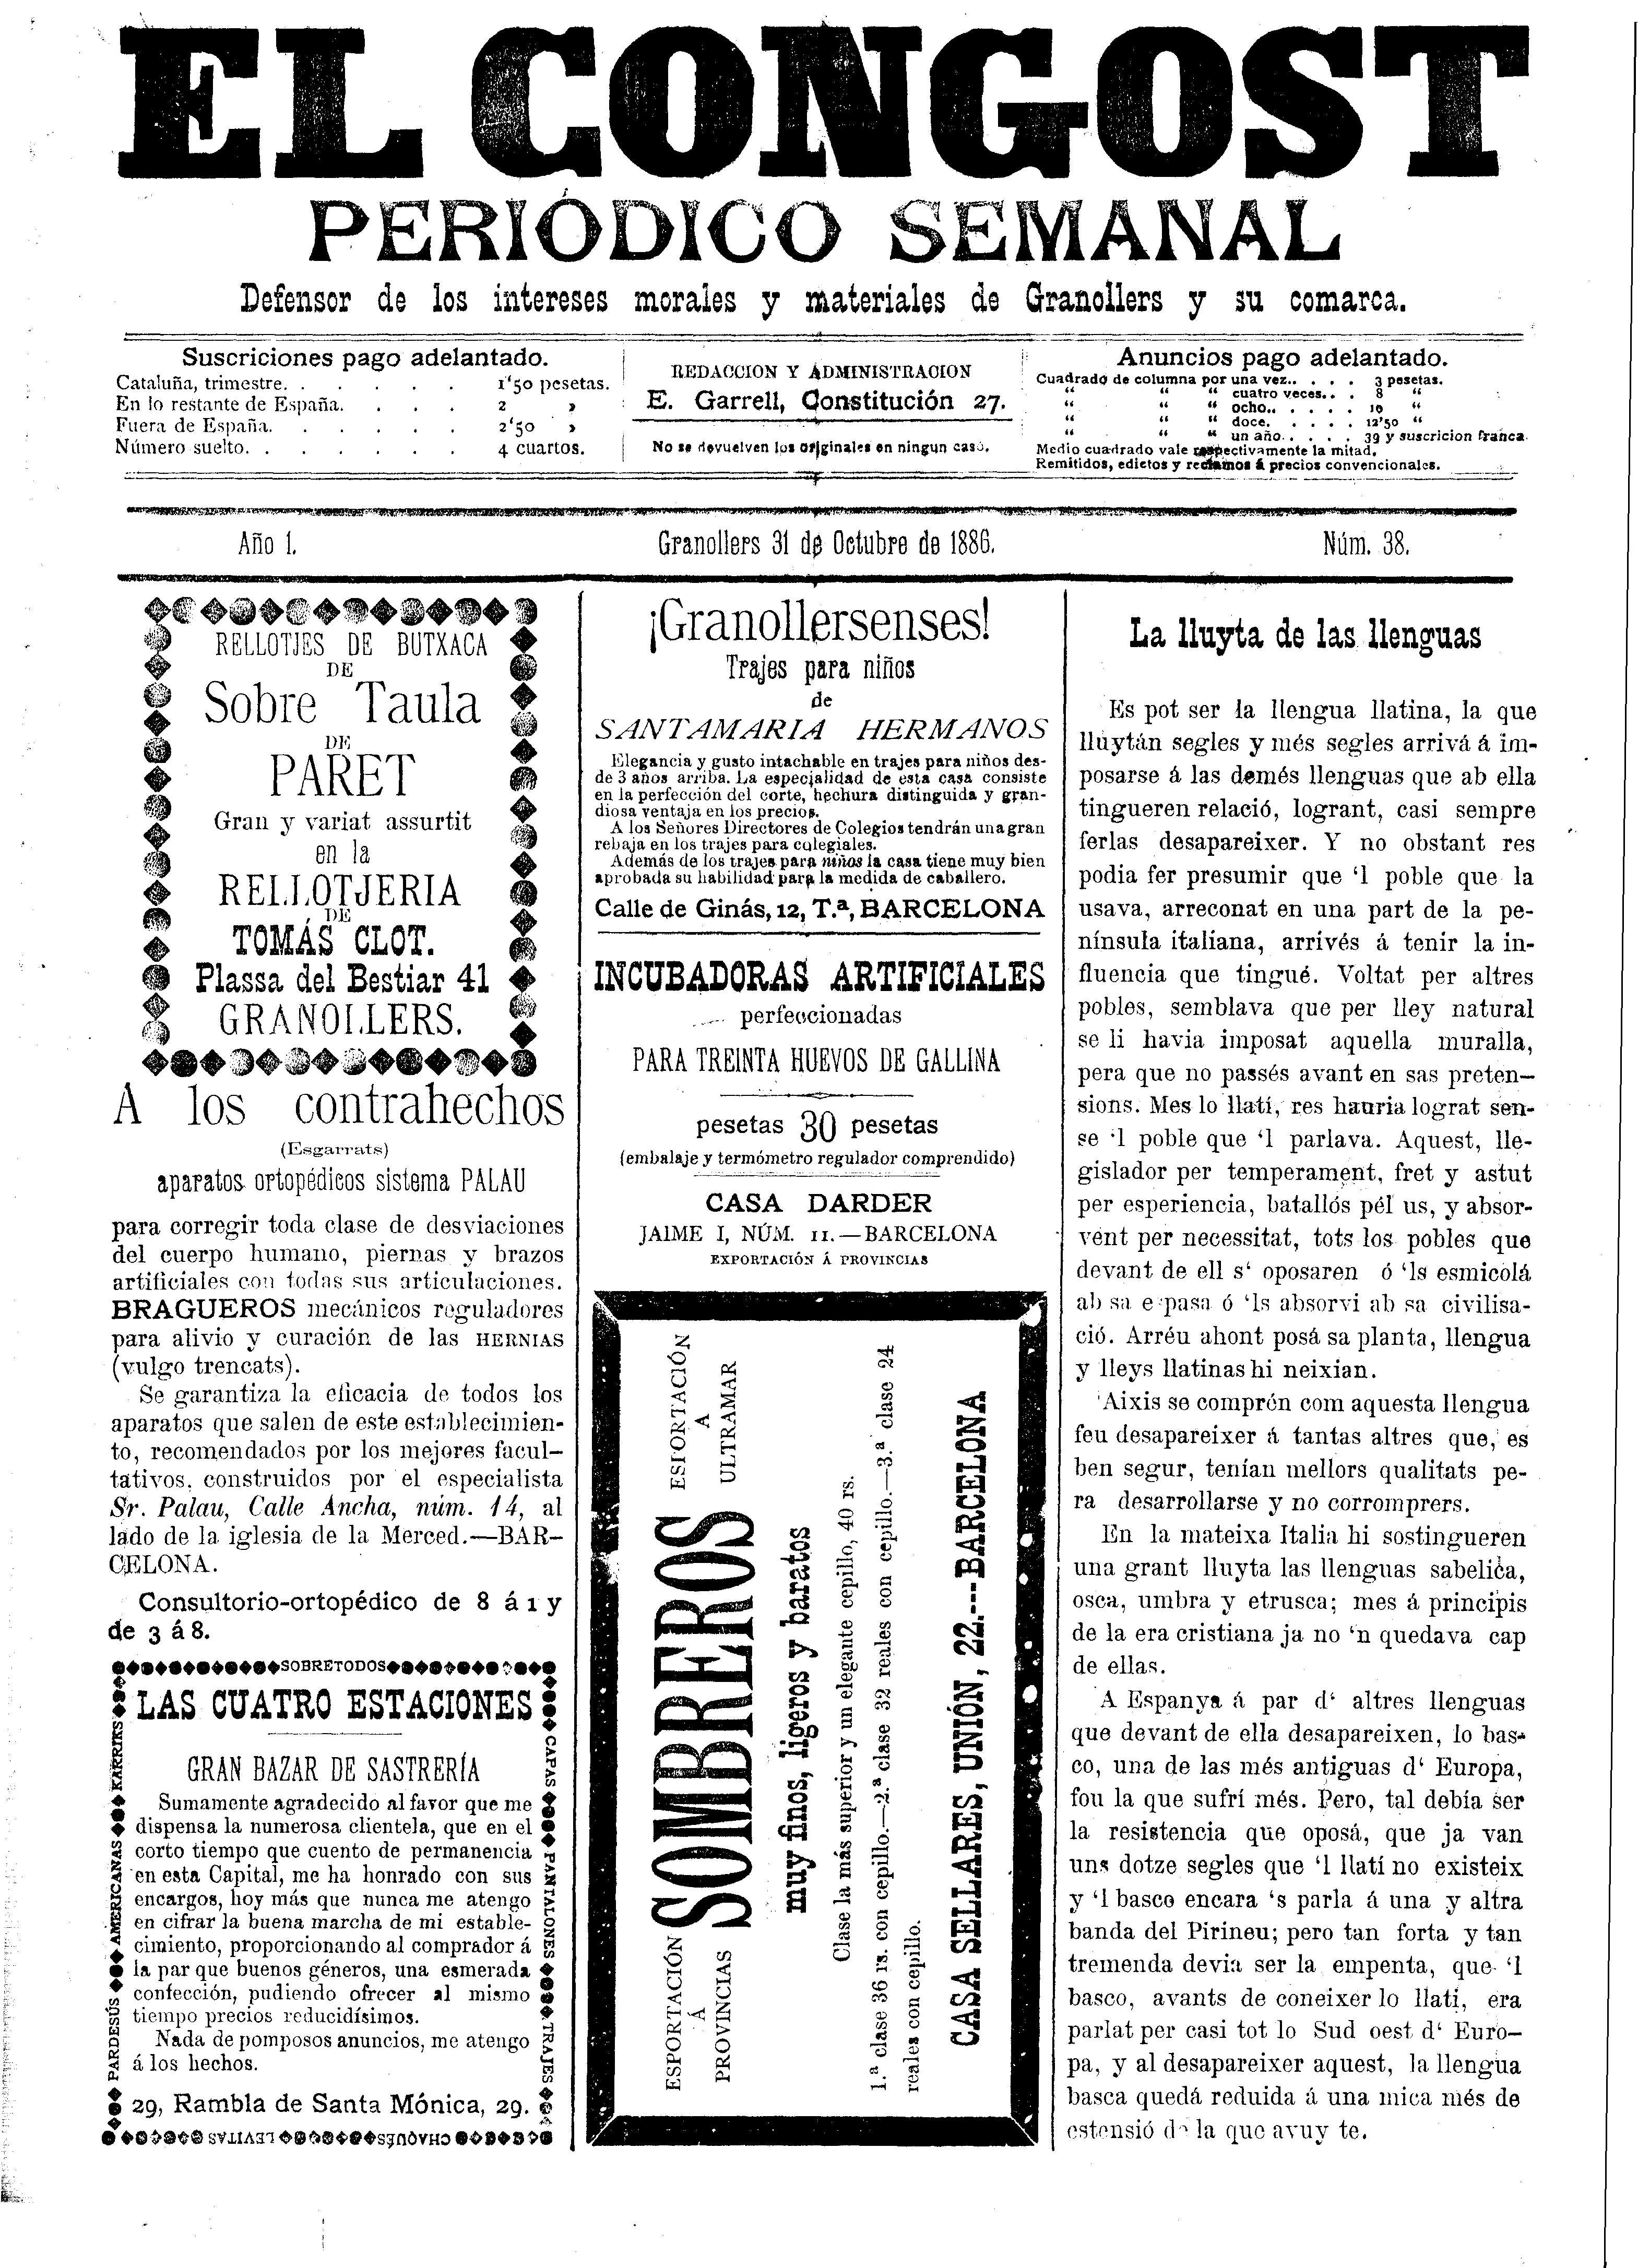 El Congost, 31/10/1886 [Exemplar]